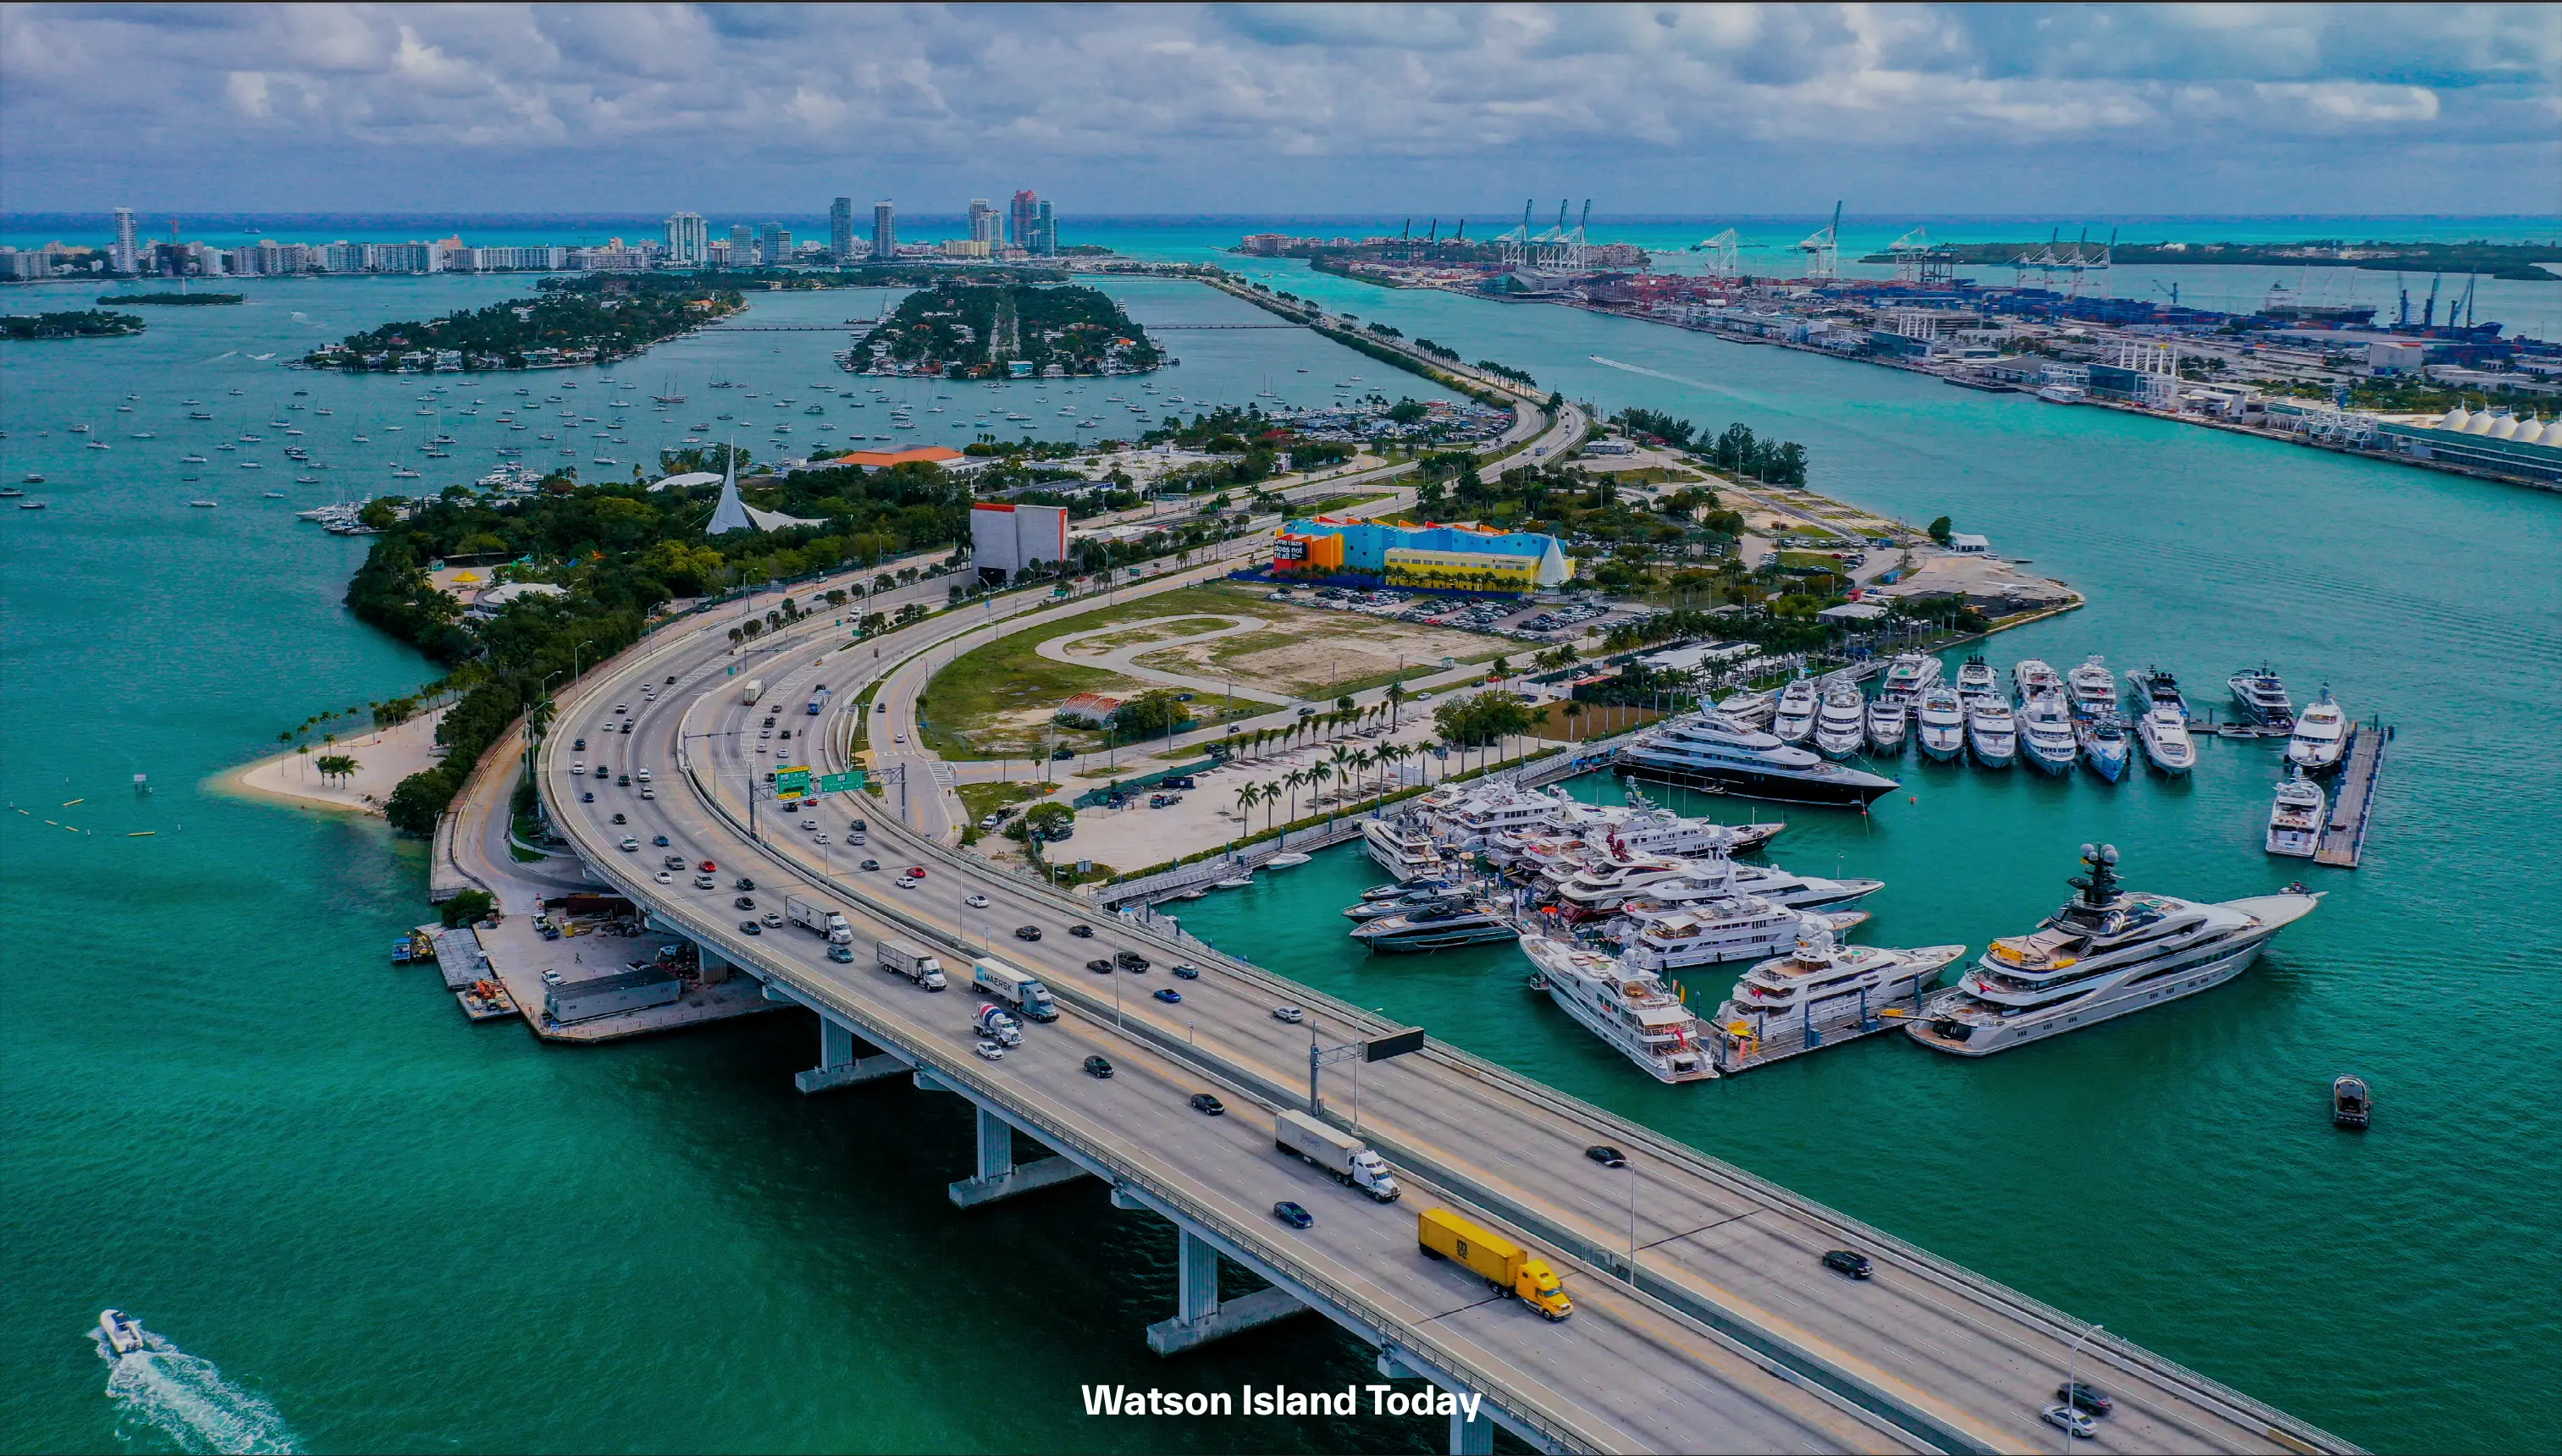 Watson Island Condo Plans: $160M+ Land Sales Head to Miami Voters